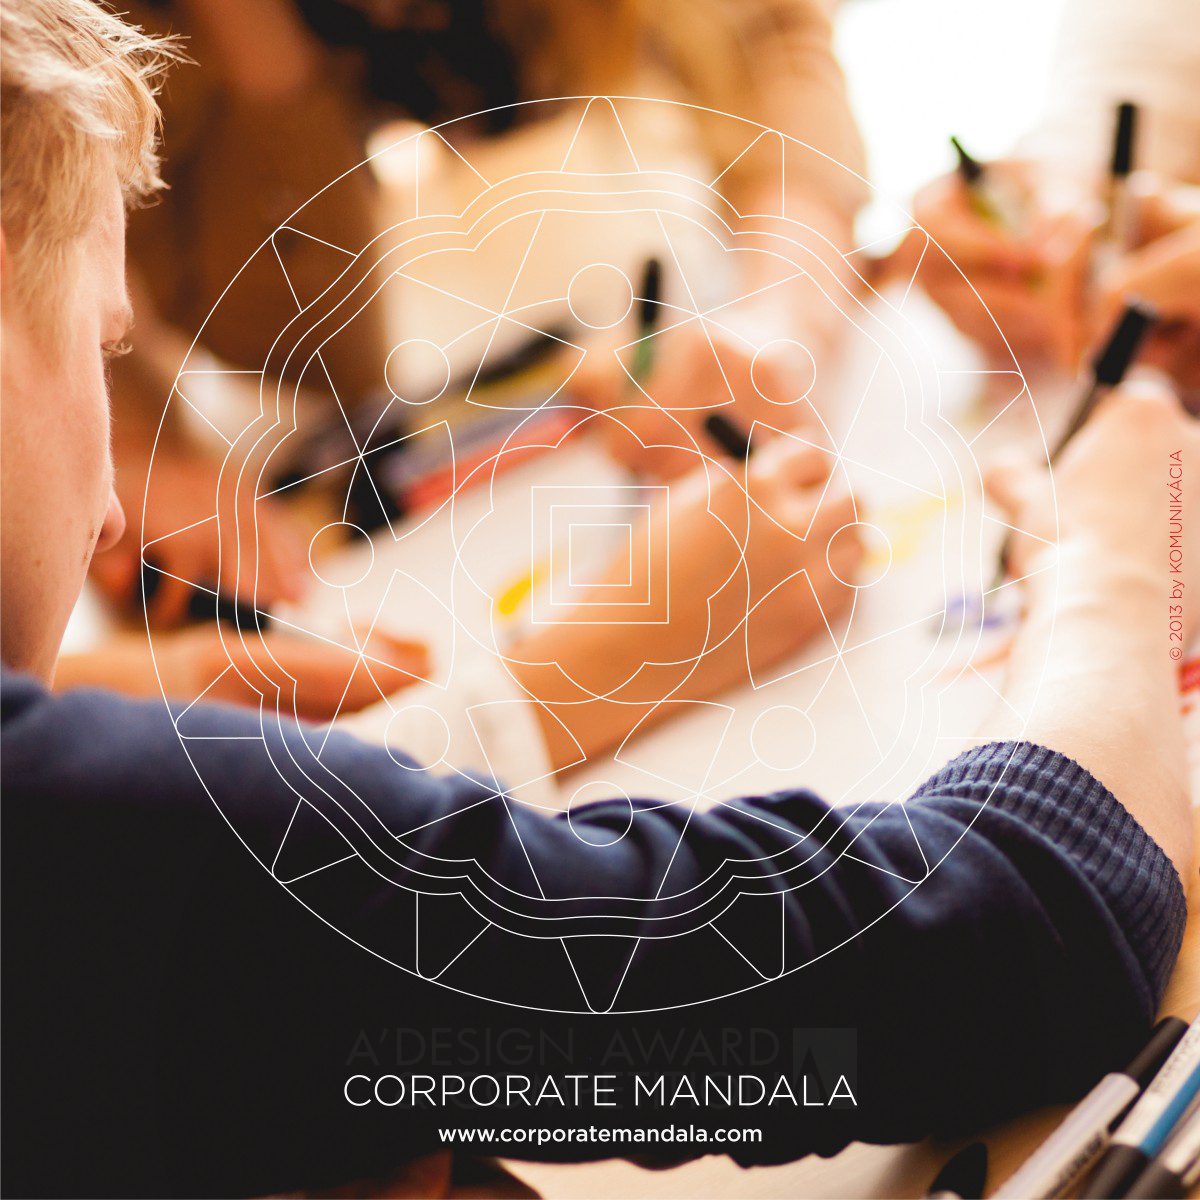 Corporate Mandala educational and training tool by Pavol Rozloznik